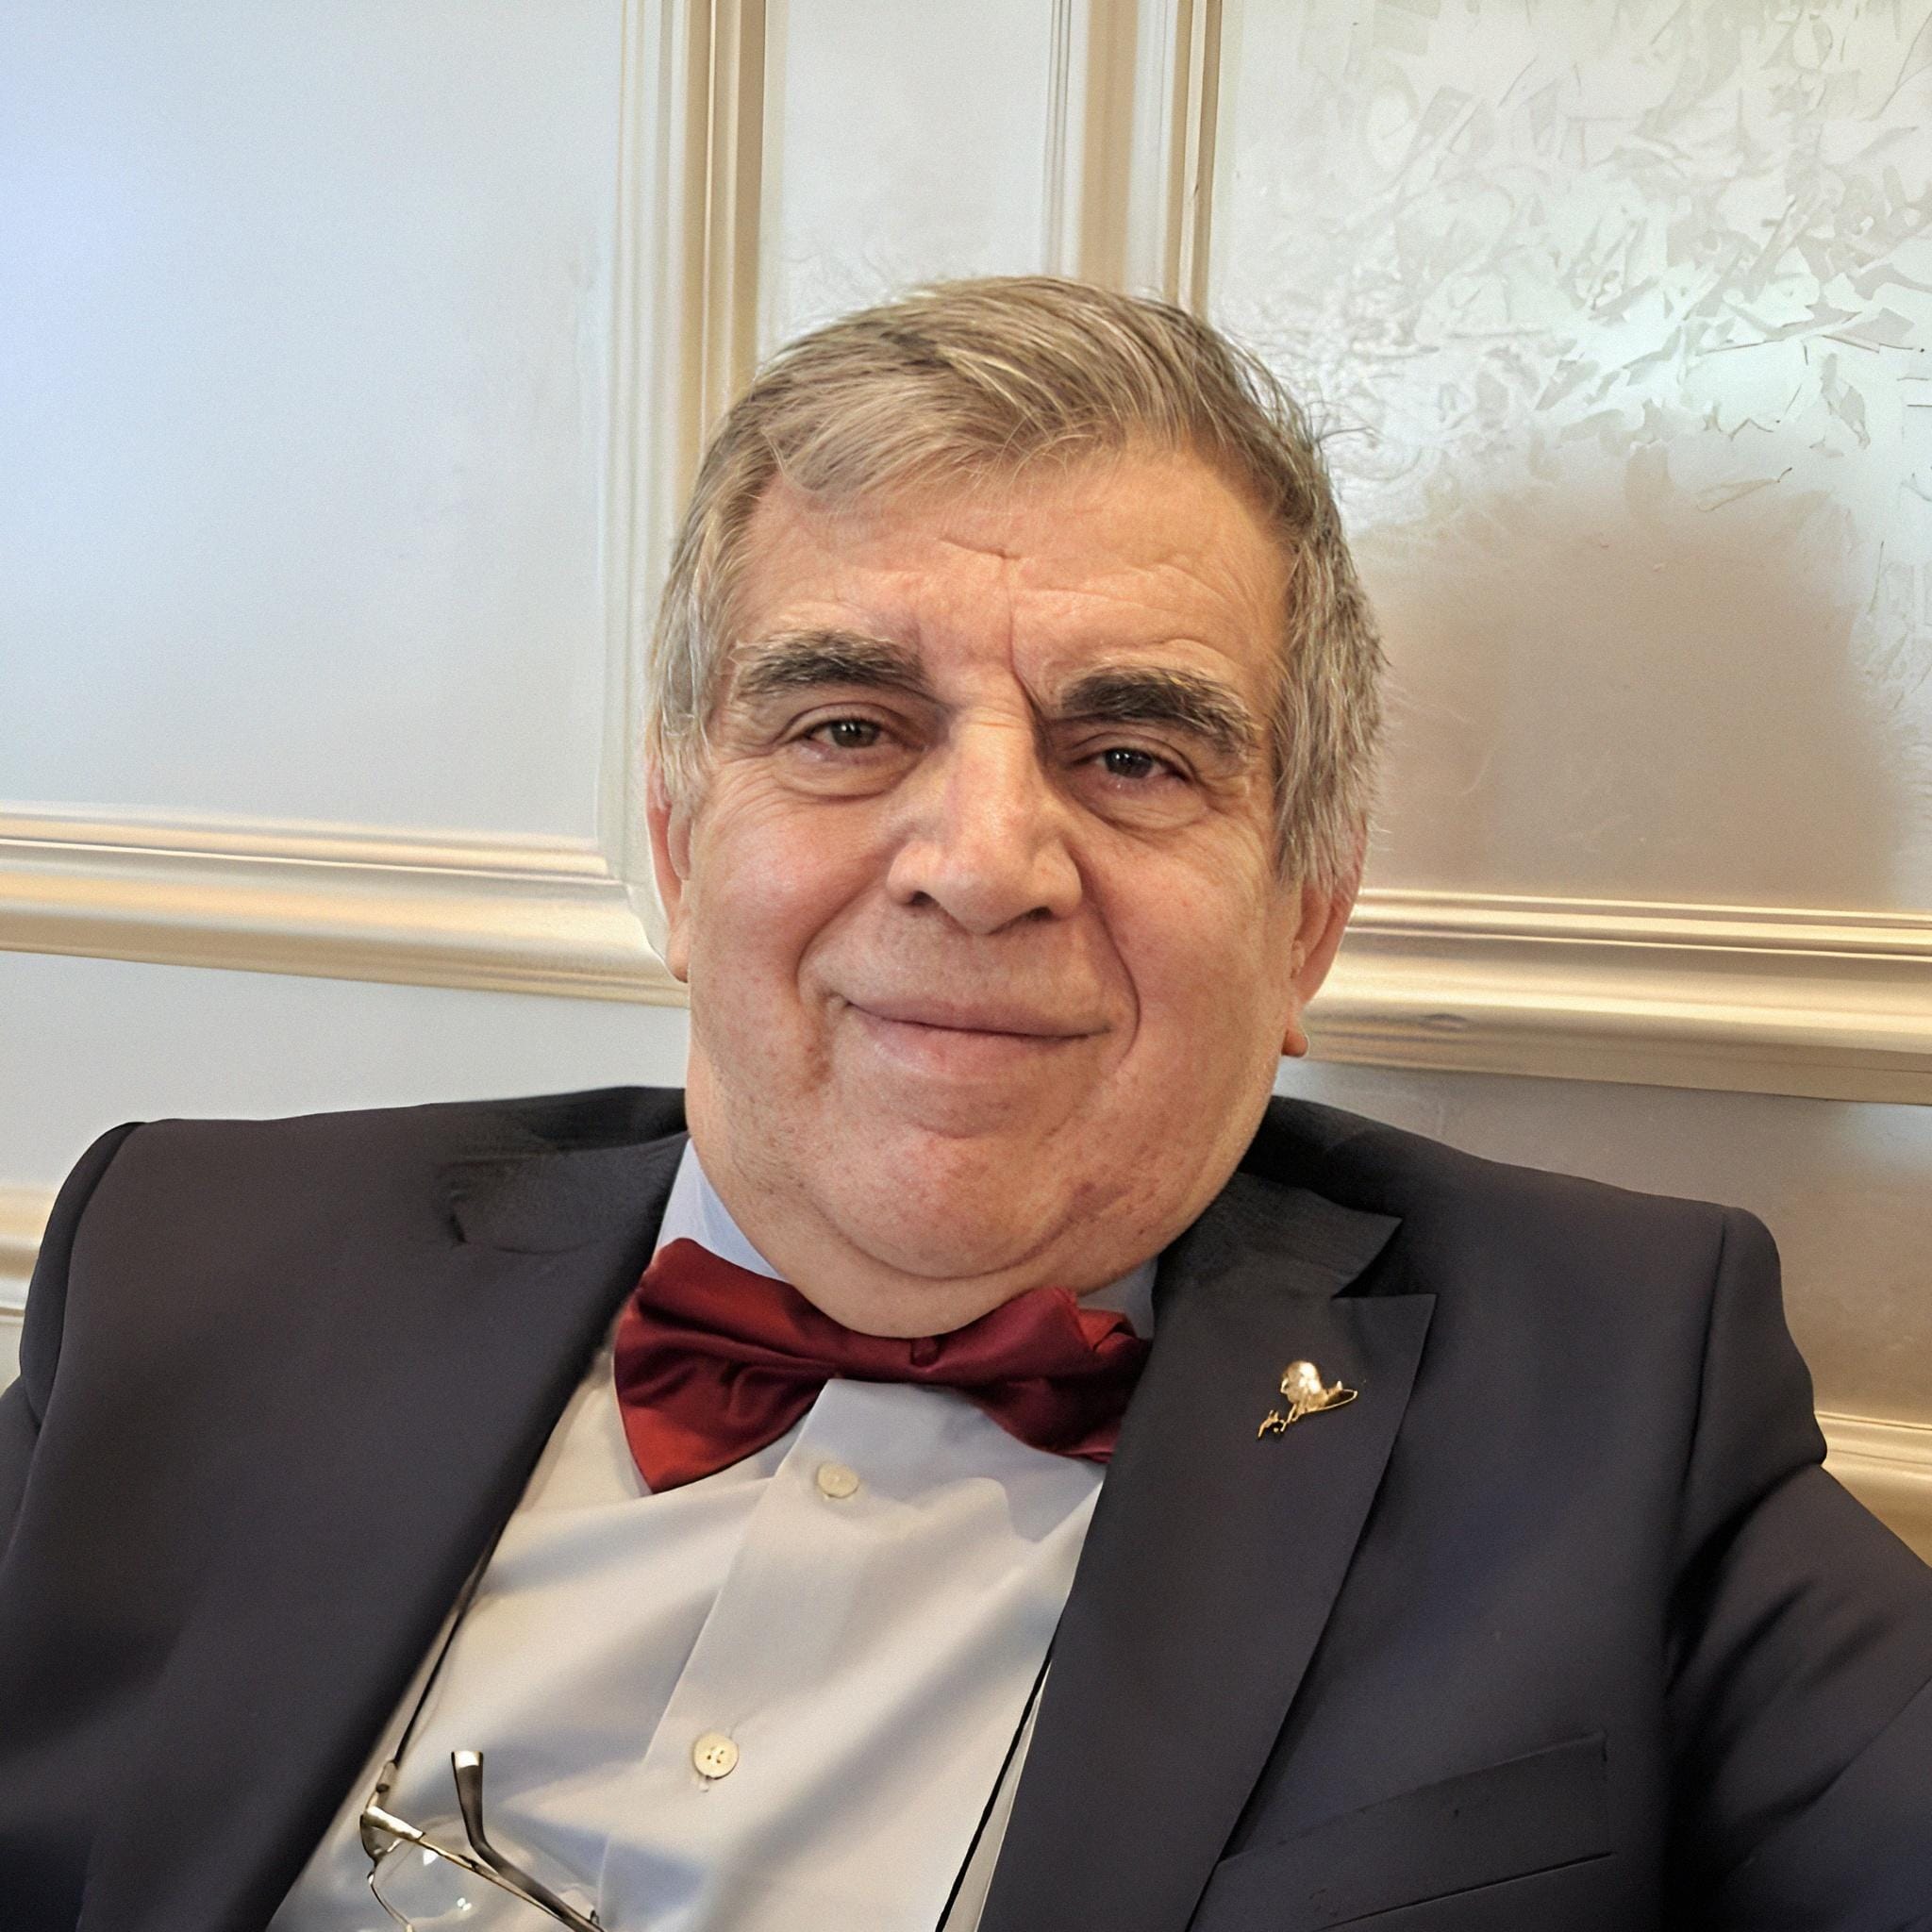 Prof. Dr. Amirullah M. Mamedov